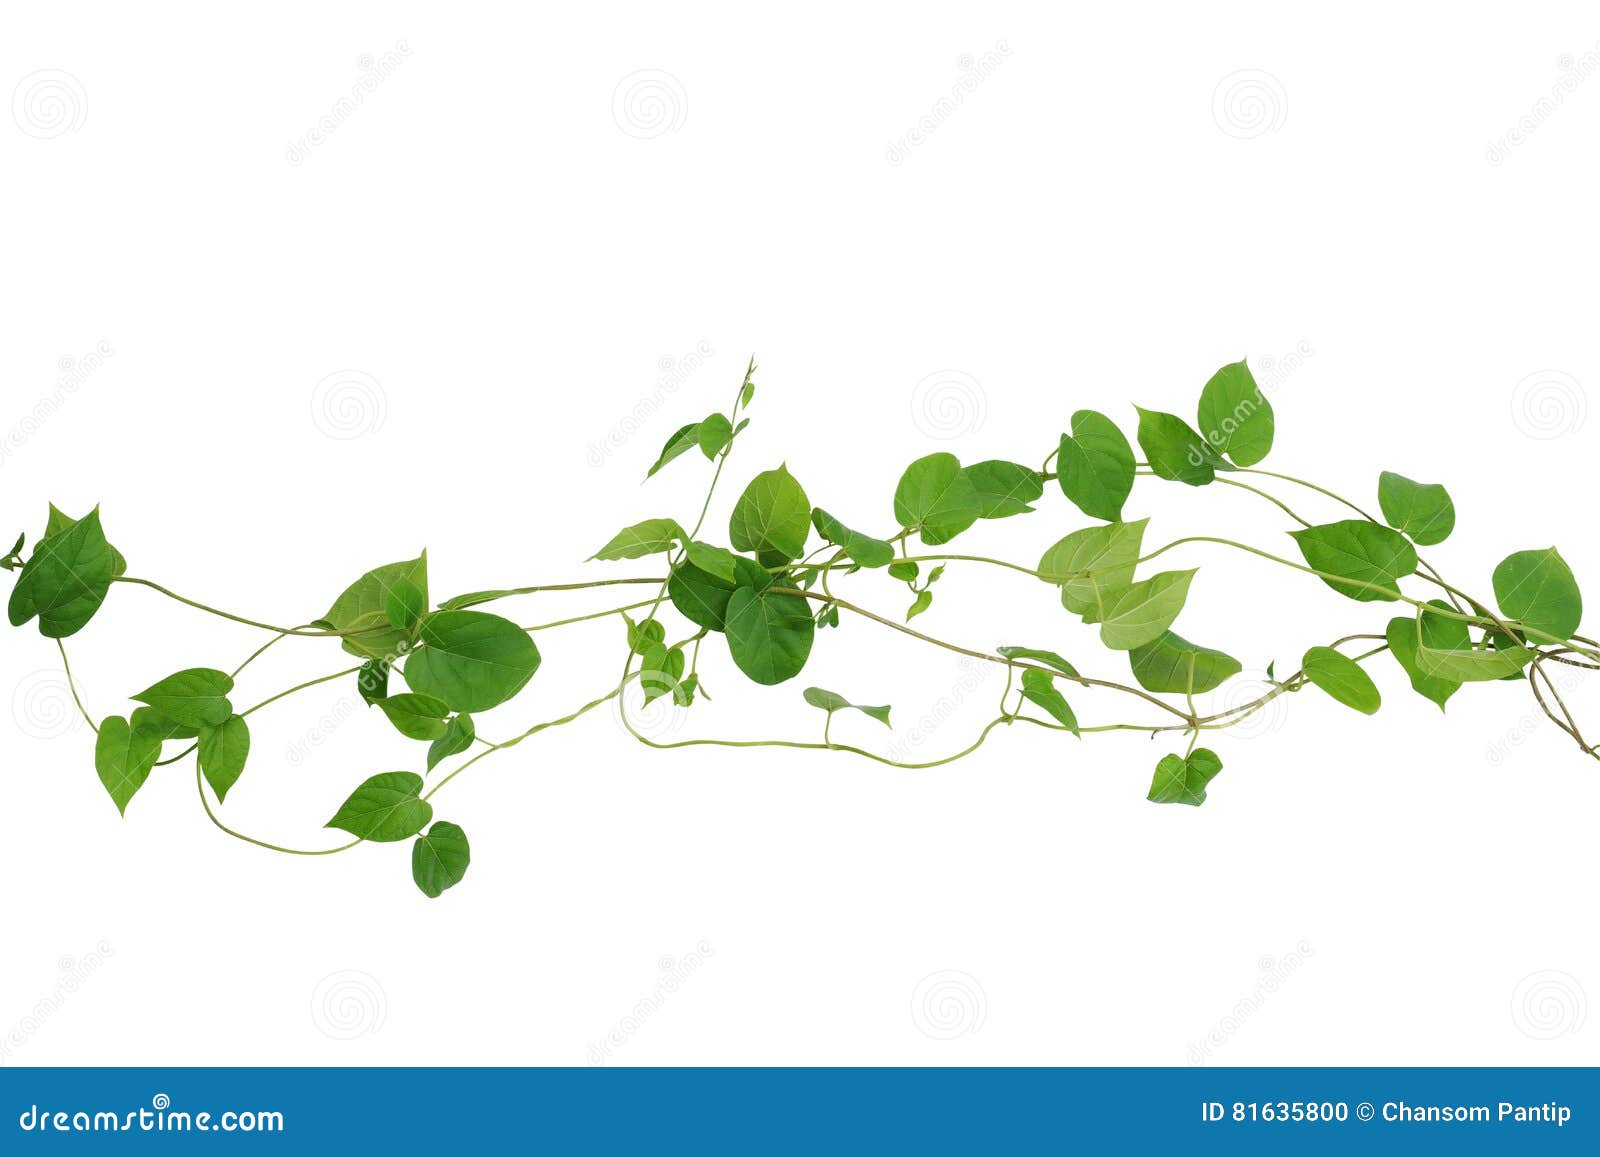 heart d green leaf vines  on white background, clip